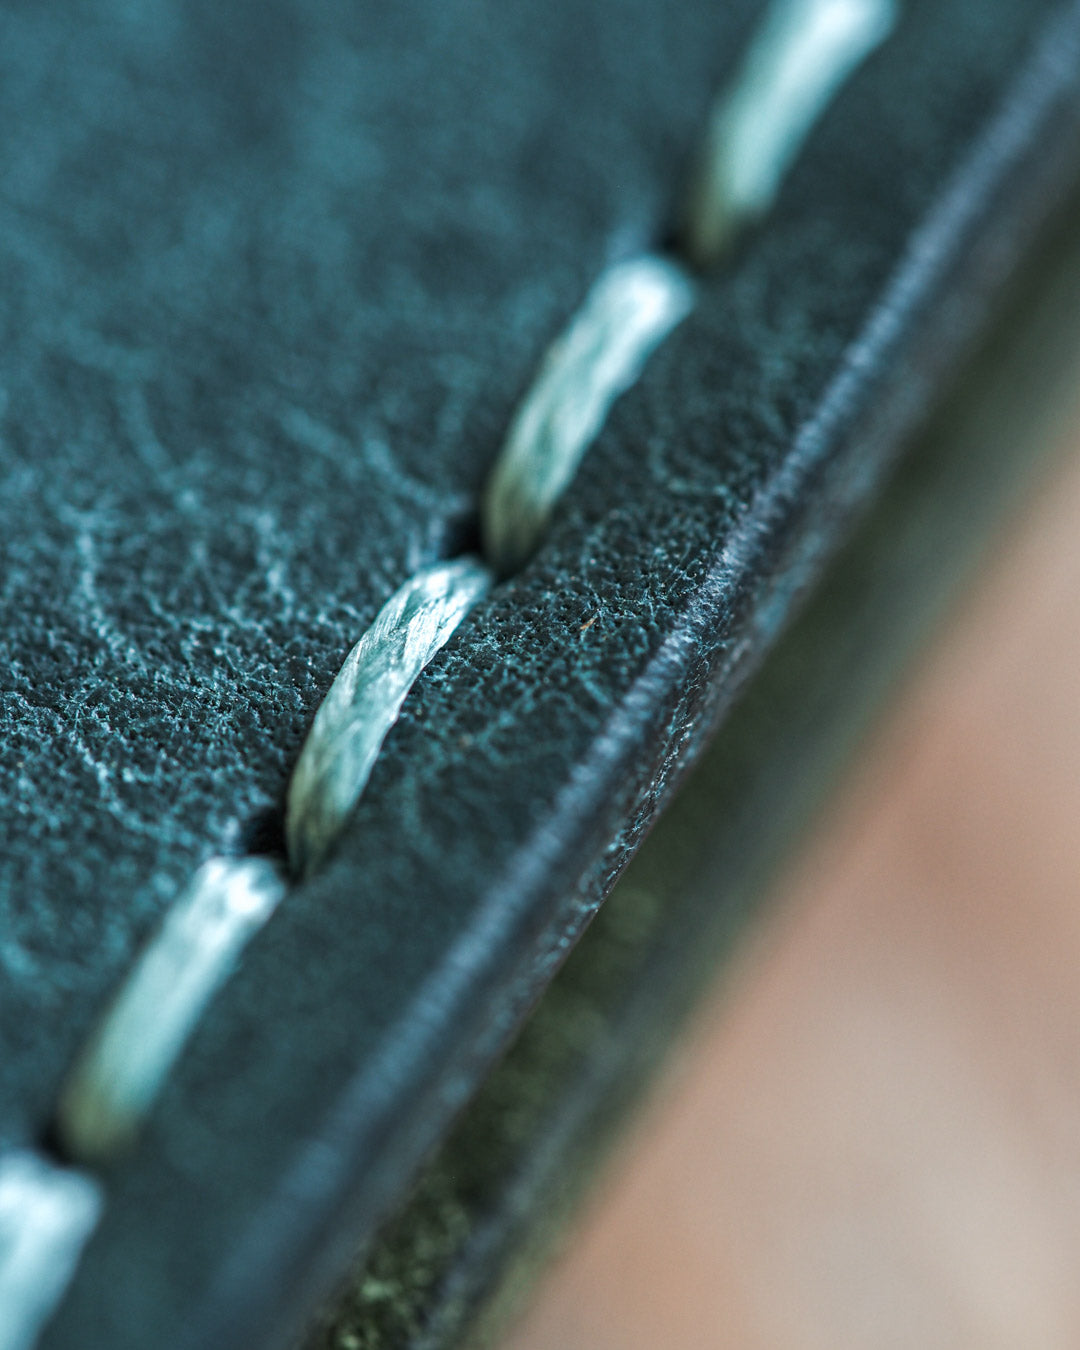 Handmade leather wallet Gambler wallet detail stitching